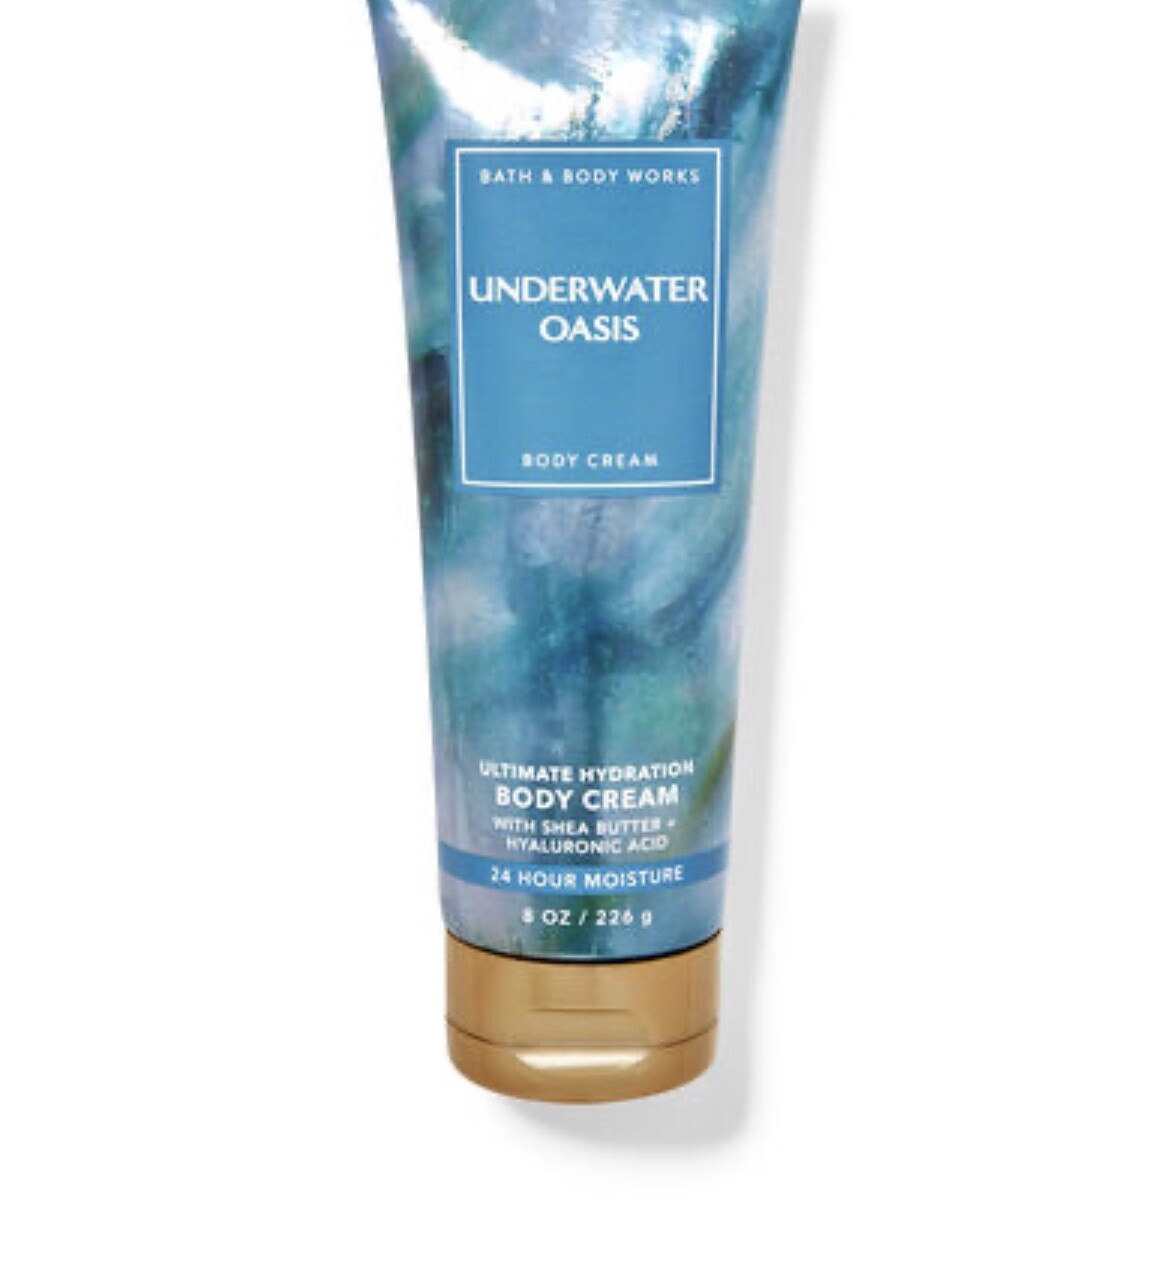 Underwater Oasis Body Cream